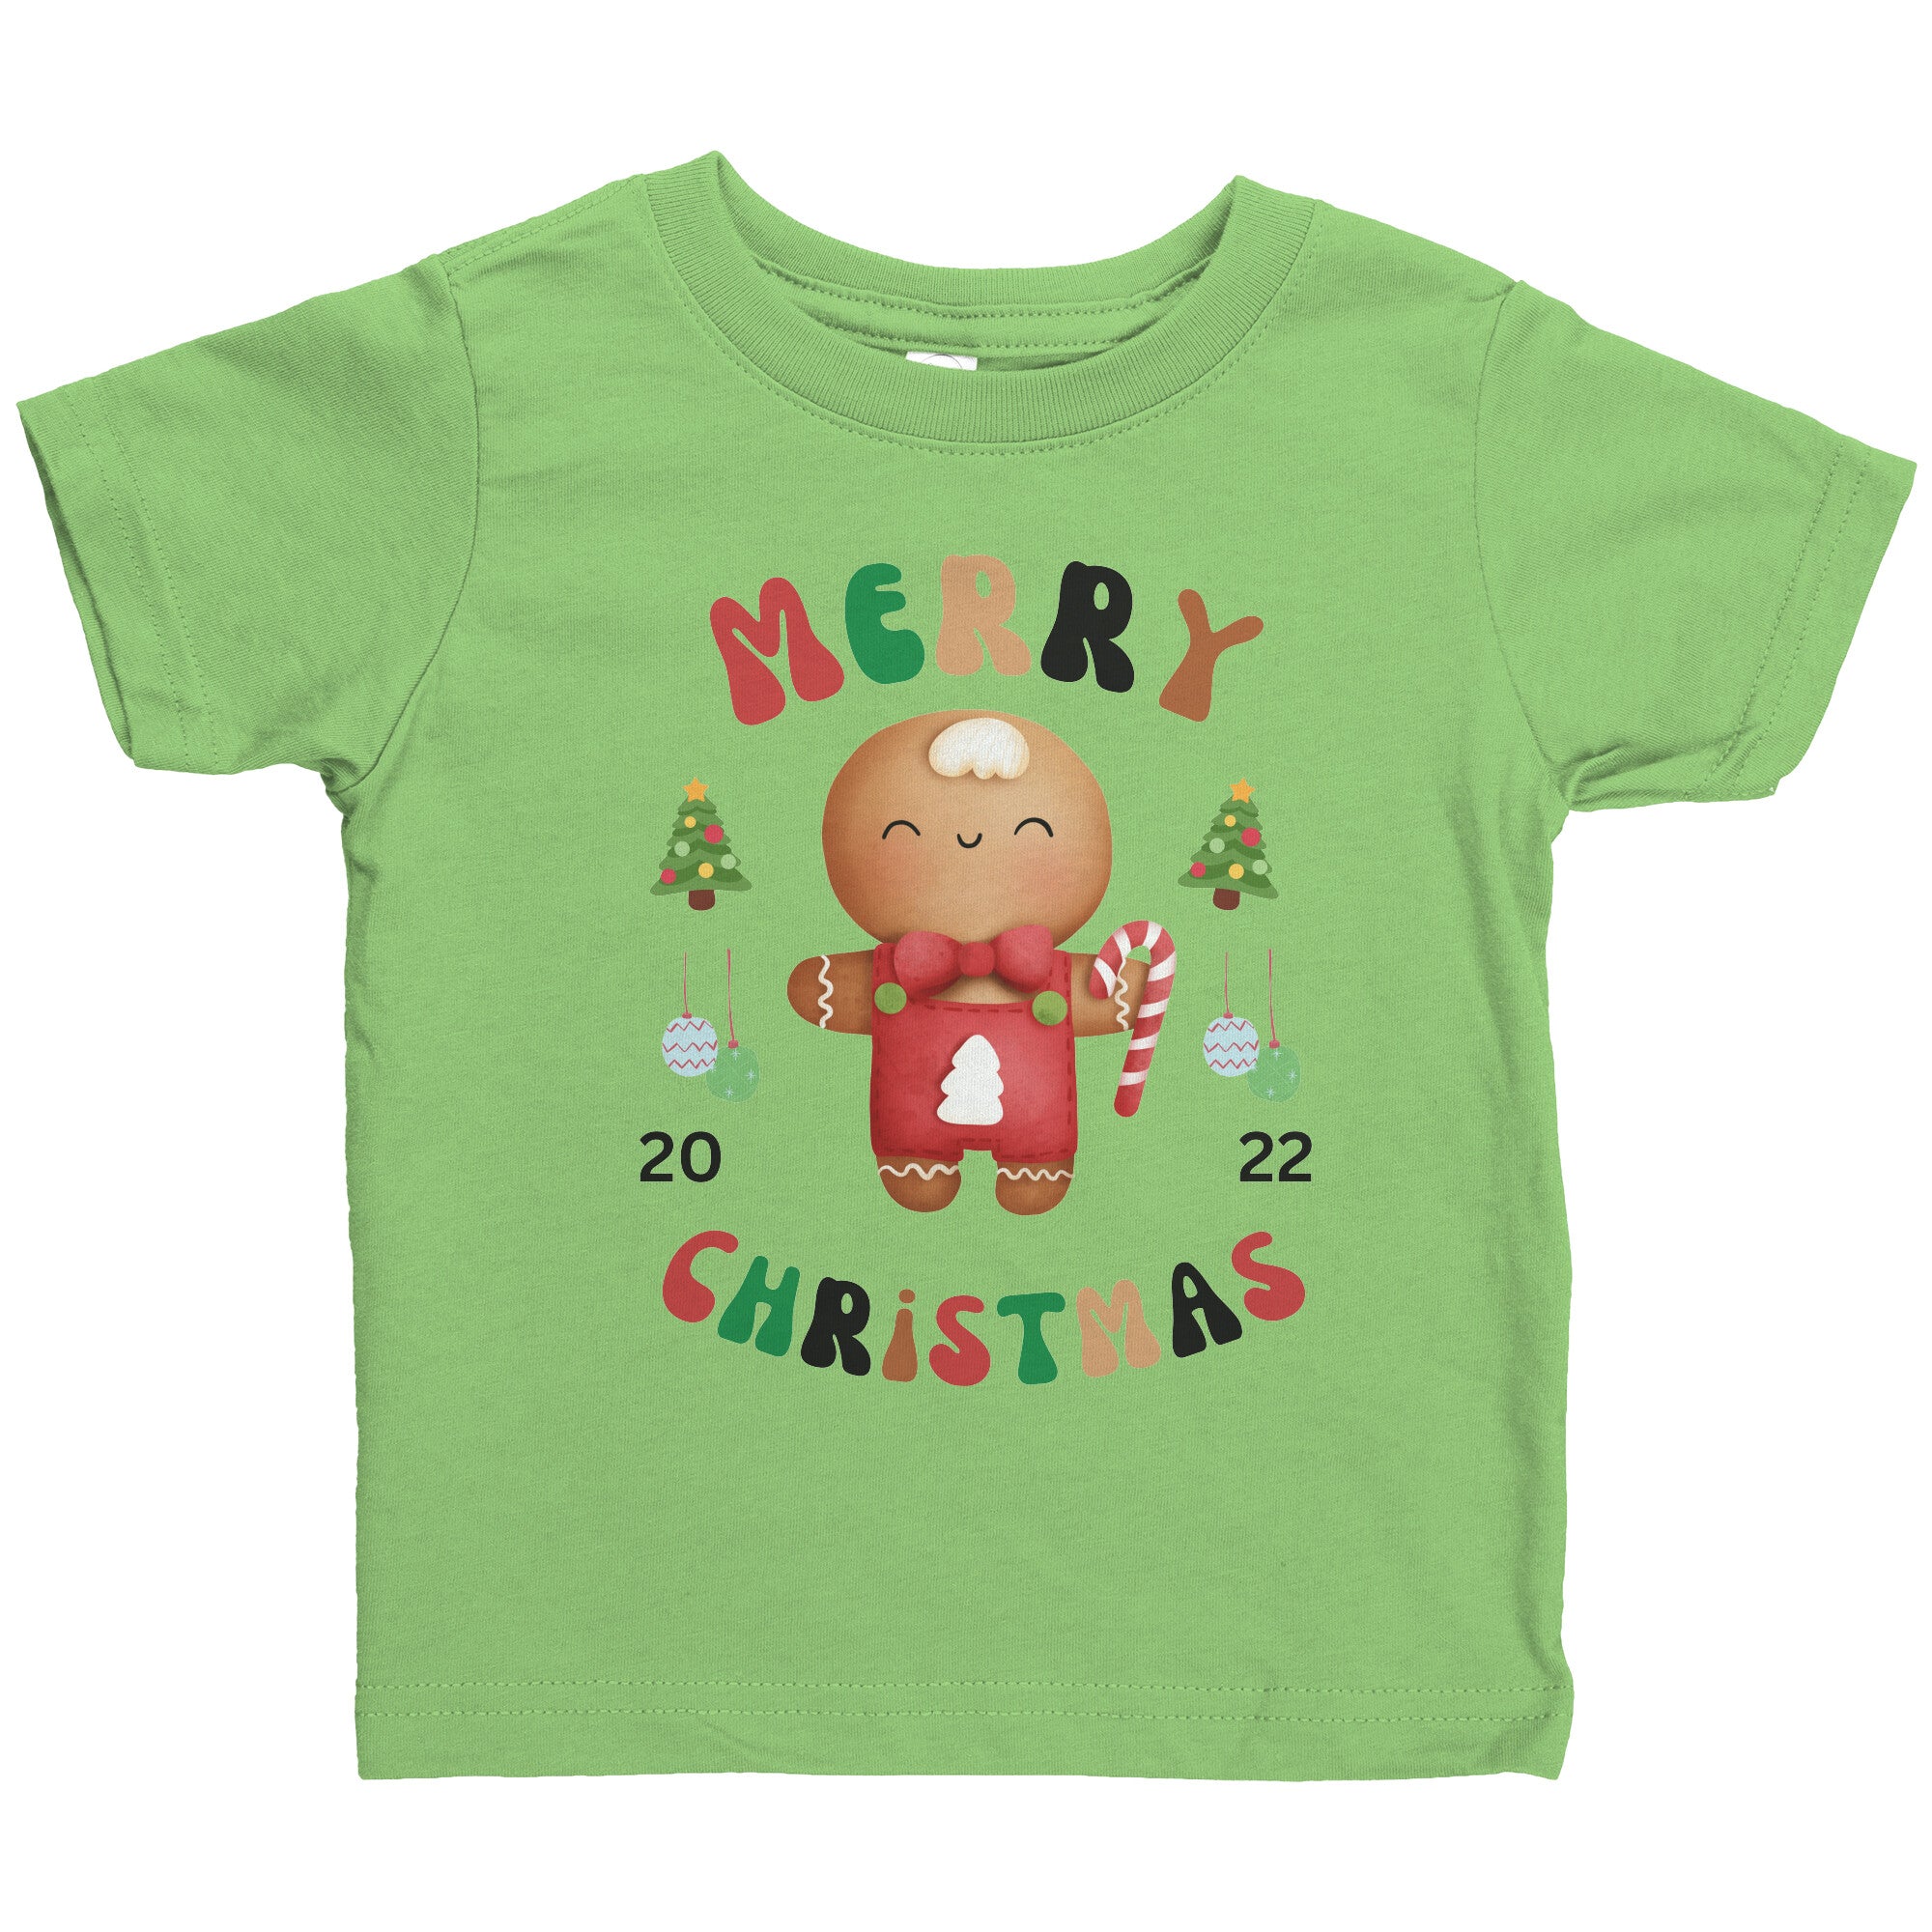 Merry Christmas Baby Shirt, Merry Christmas Infant Shirt